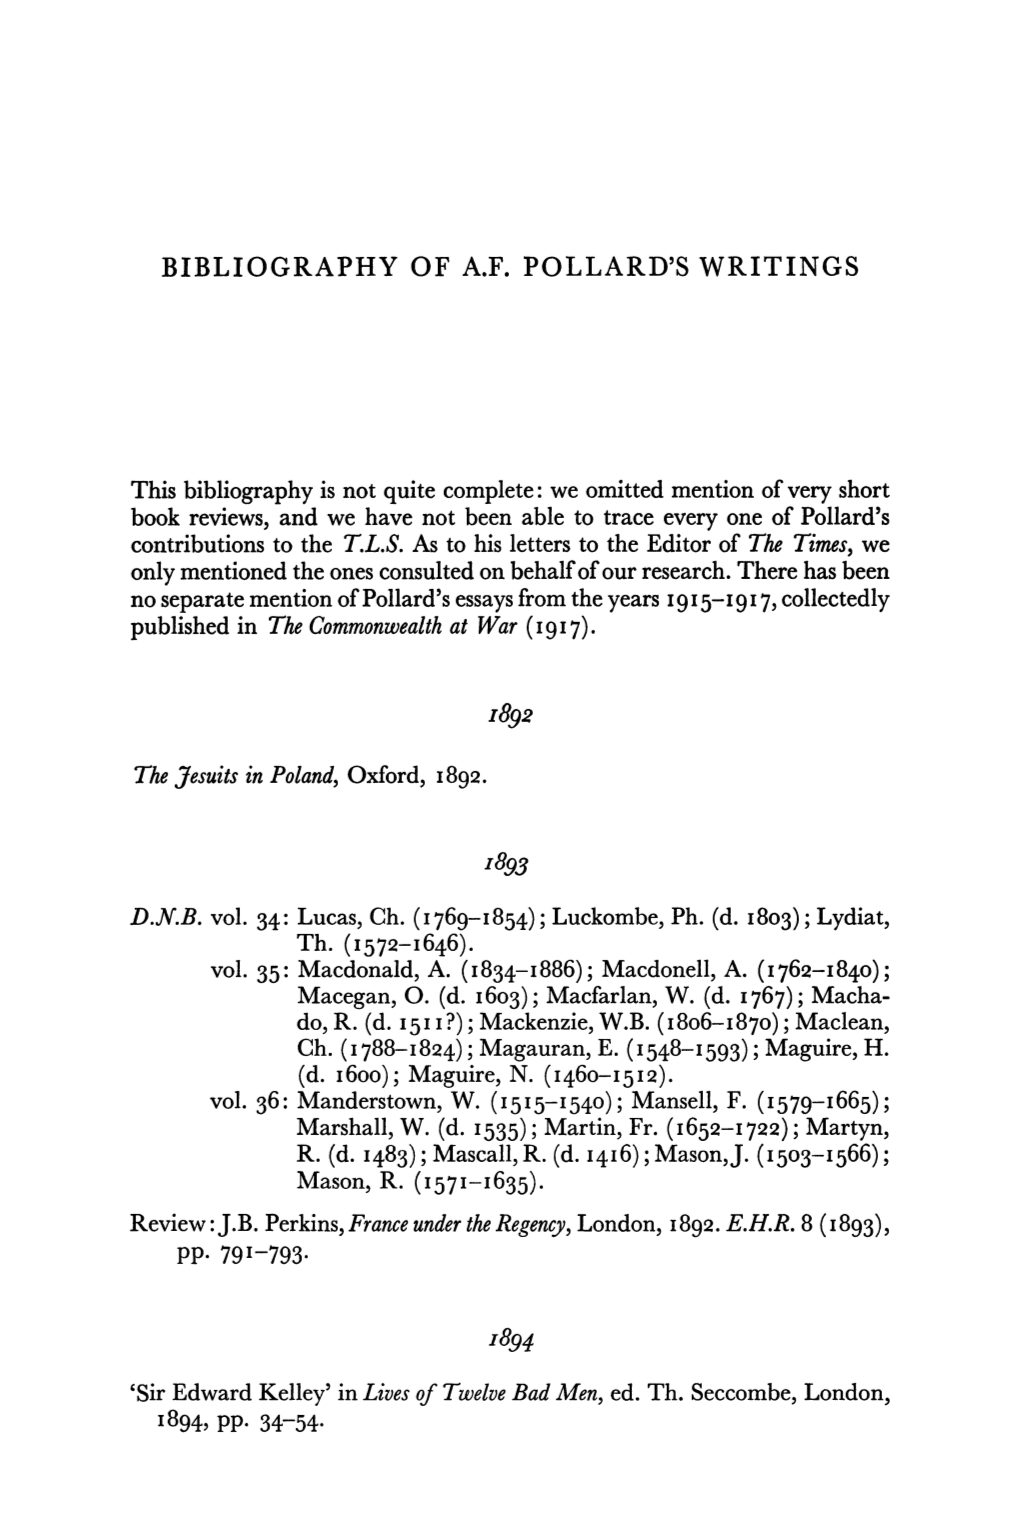 Bibliography of A.F. Pollard's Writings